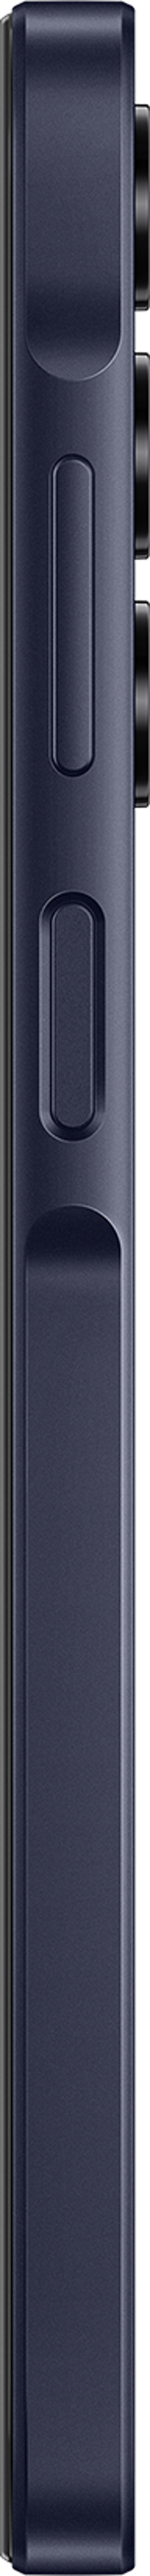 Samsung Galaxy A25 5G 128GB Musta, Sininen